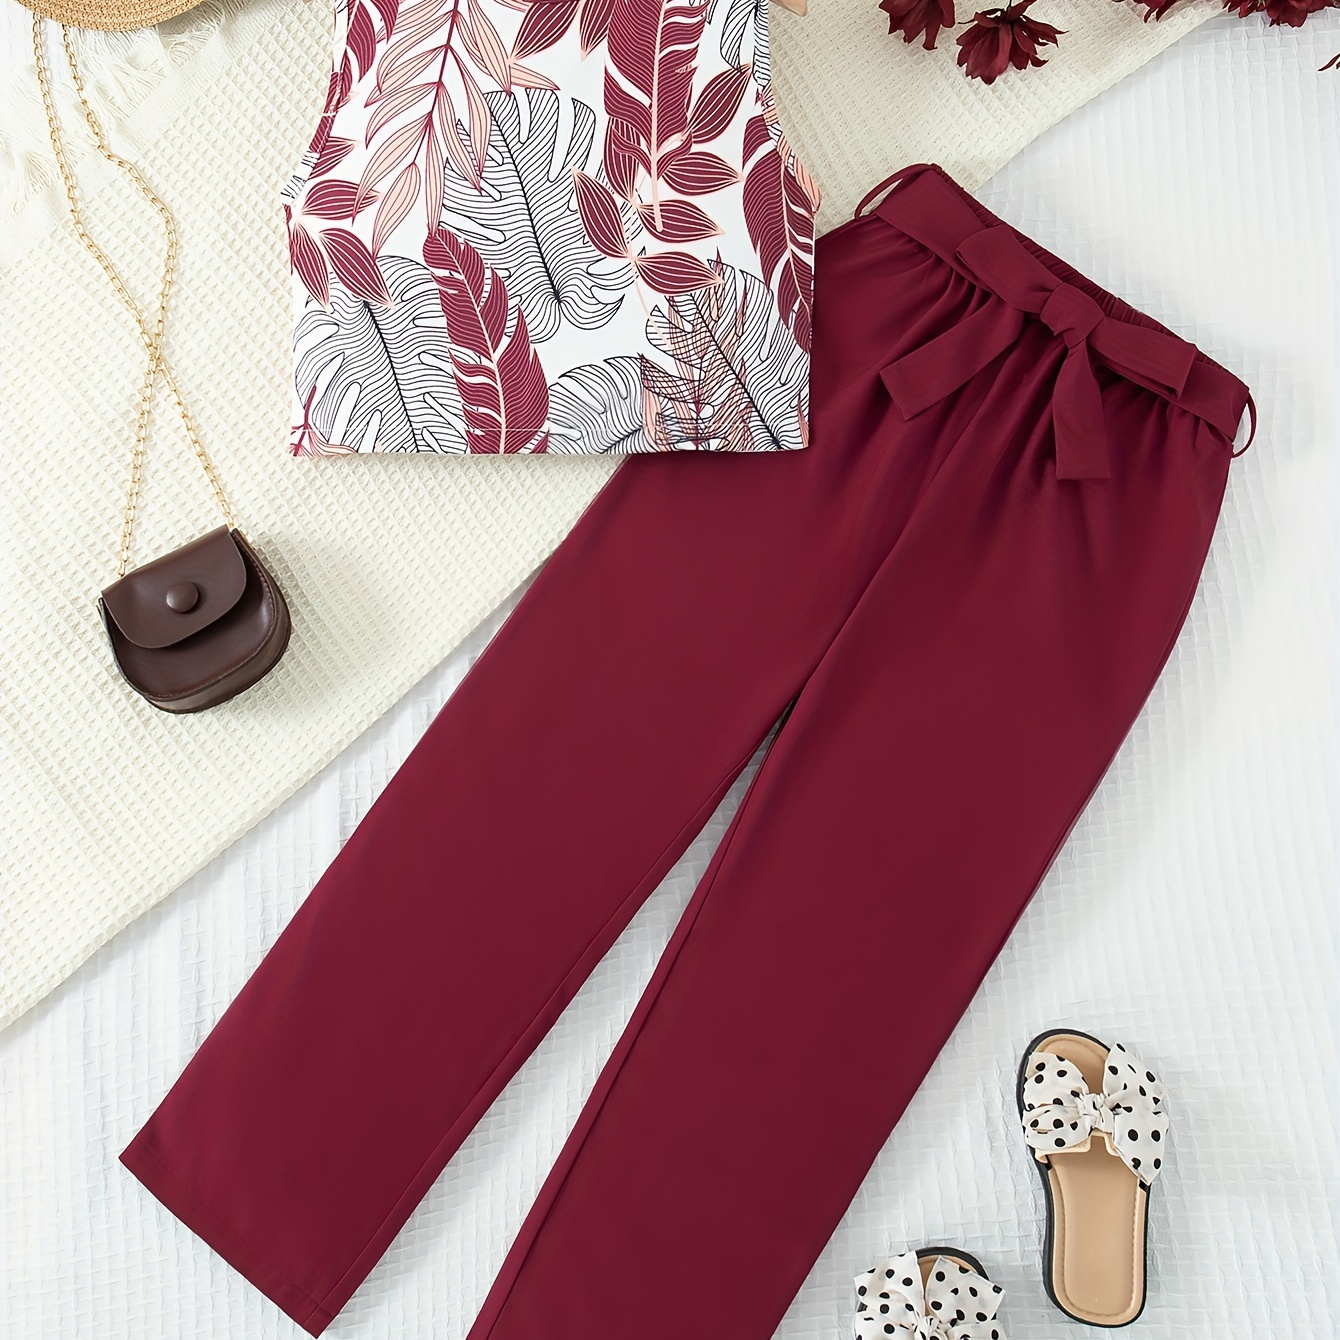 

Elegant Girl's 2pcs, Leaves Print Crew Neck Sleeveless T-shirt Top + Strapped Pants Set For Summer Holiday Gift